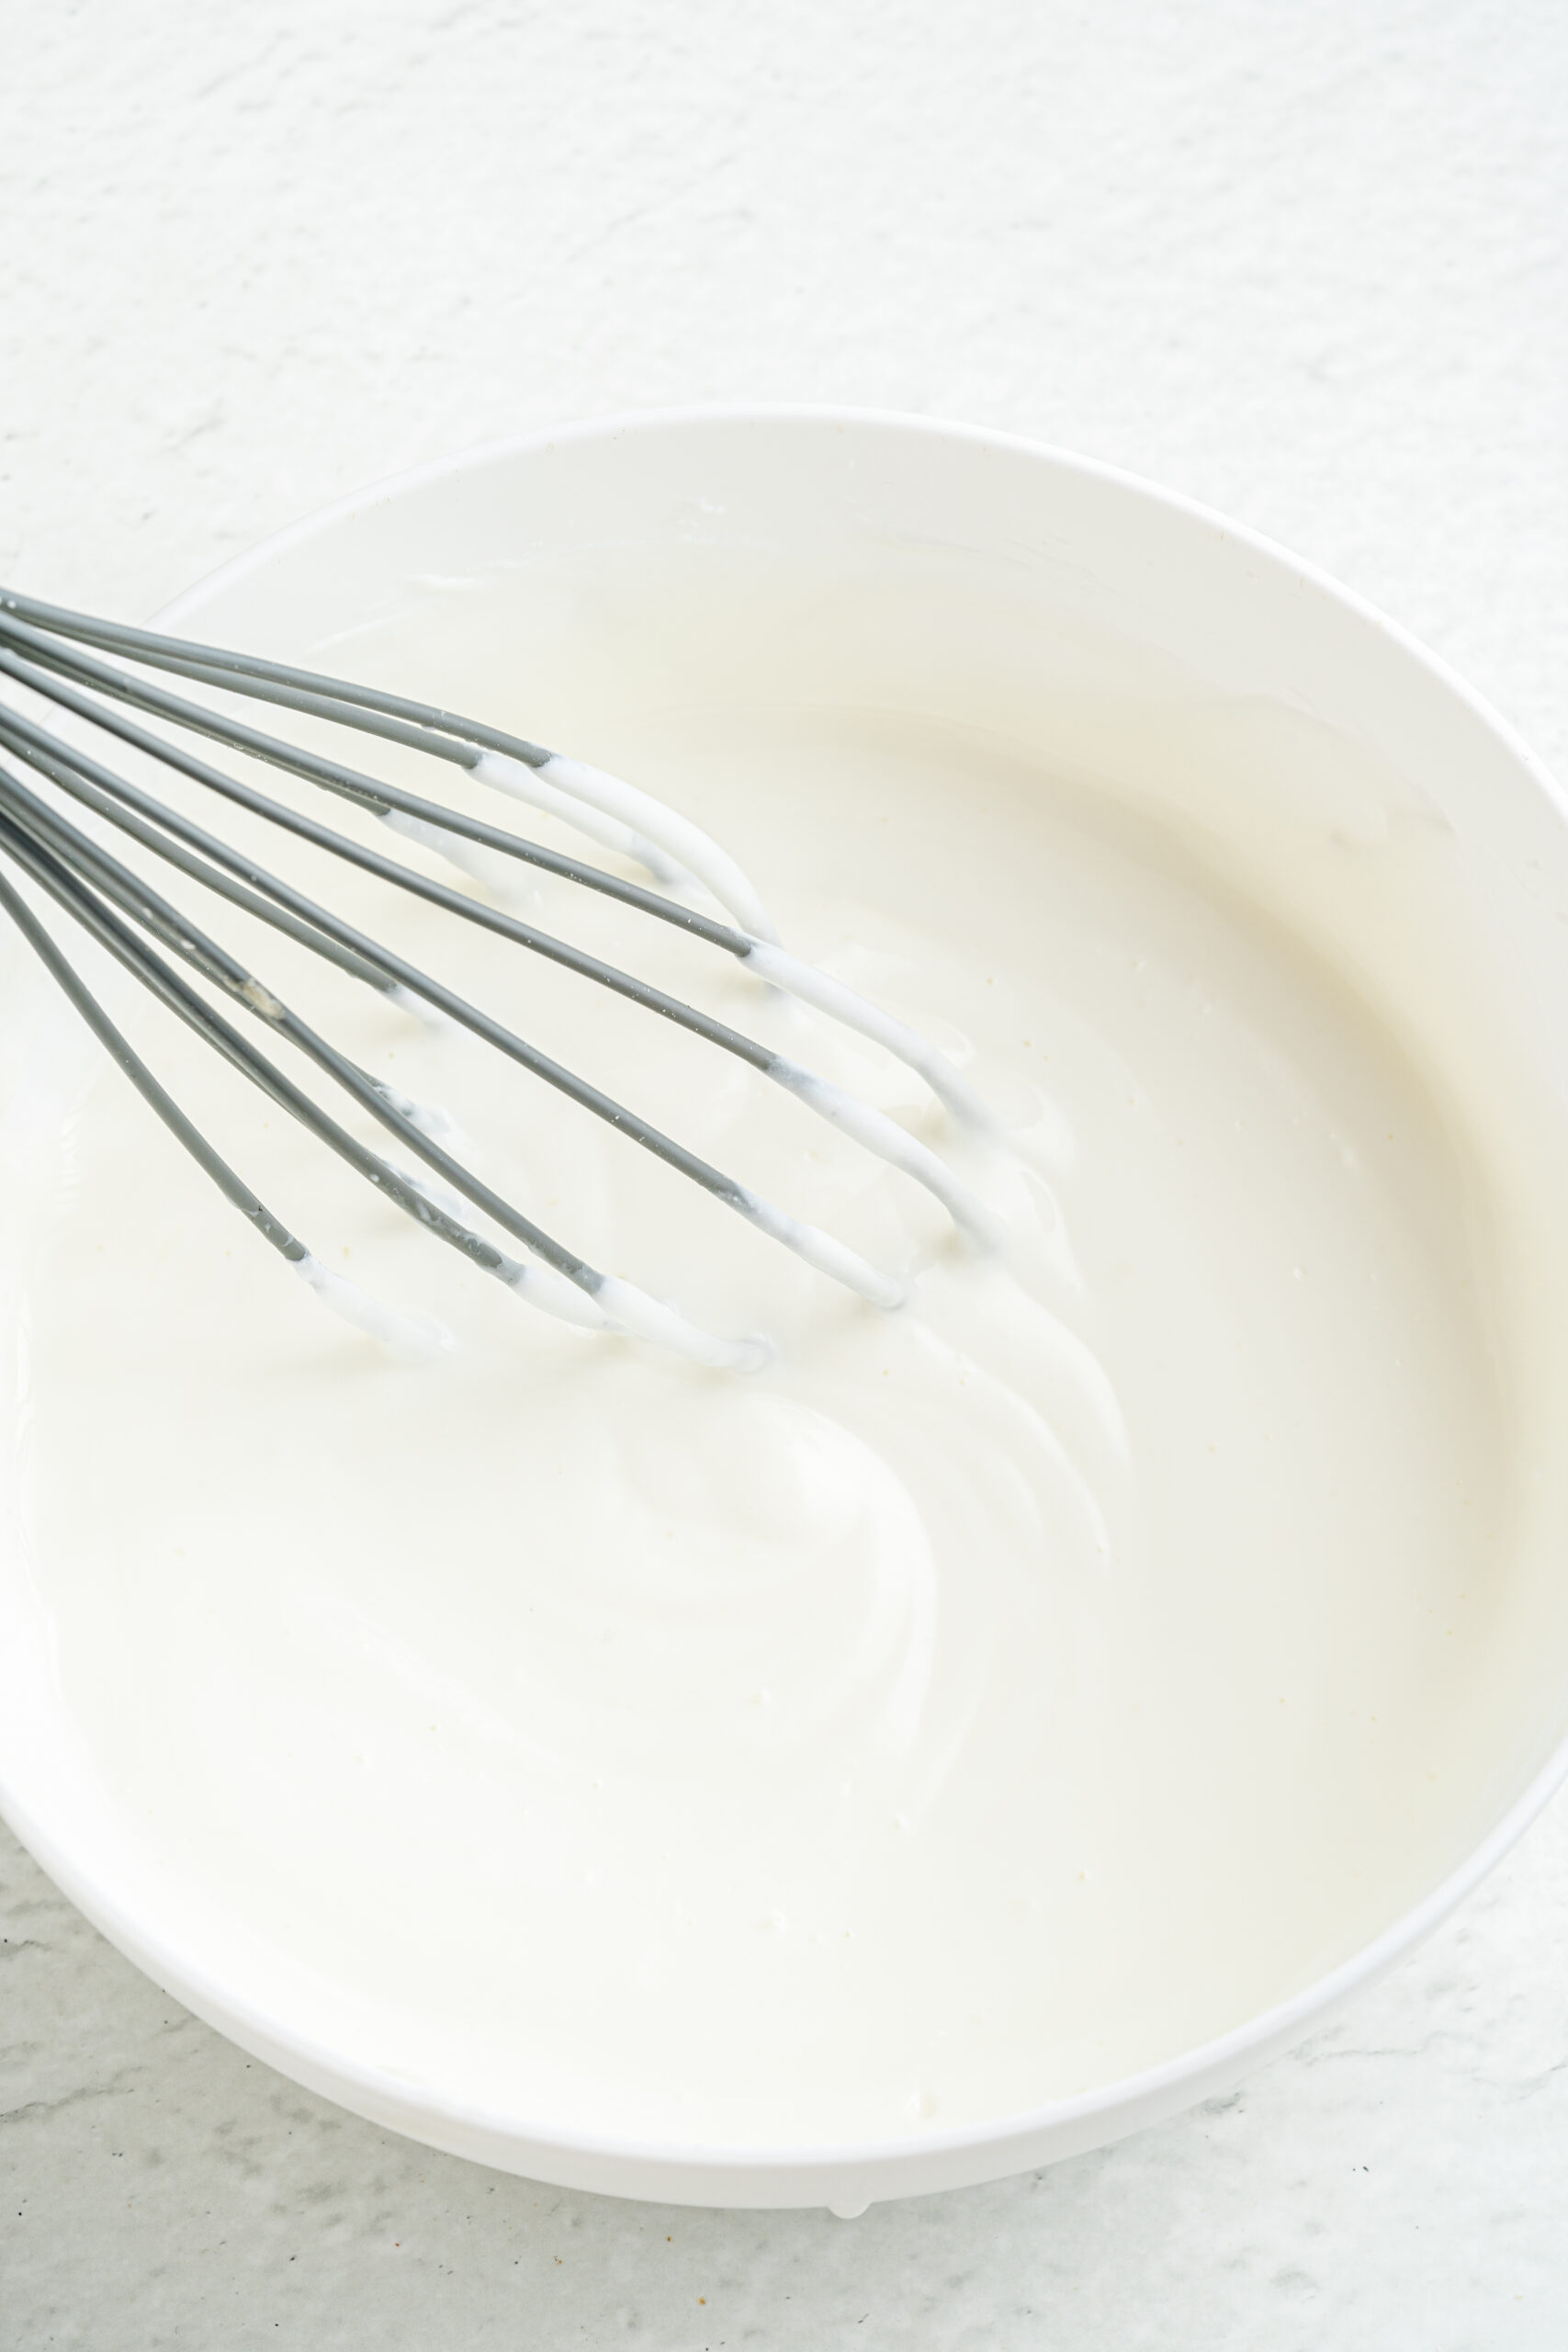 Greek yogurt in mixing bowl.